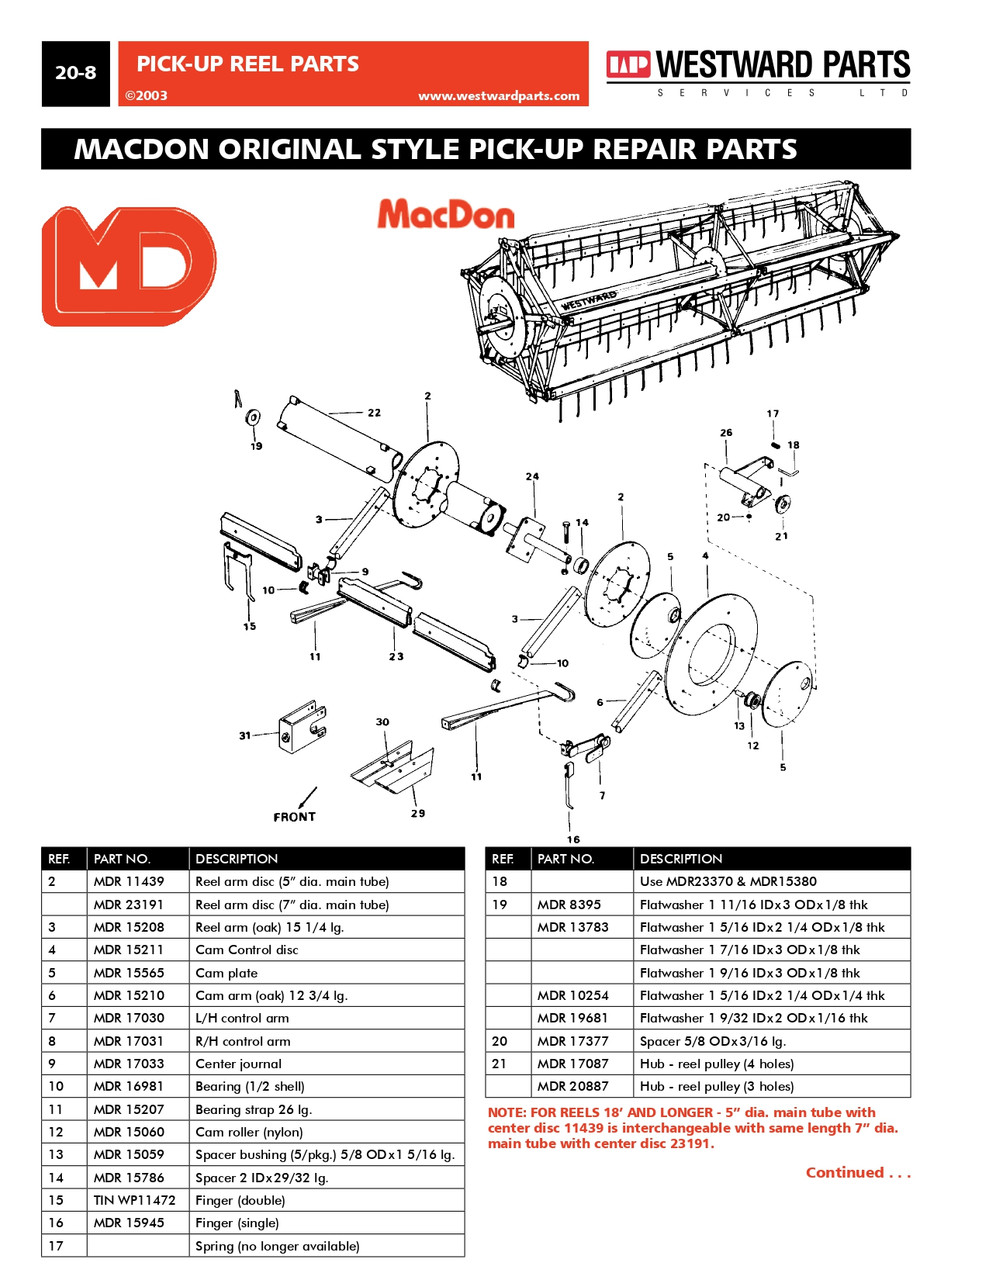 Macdon "Original" Reel Bearing Strap  MDR15207